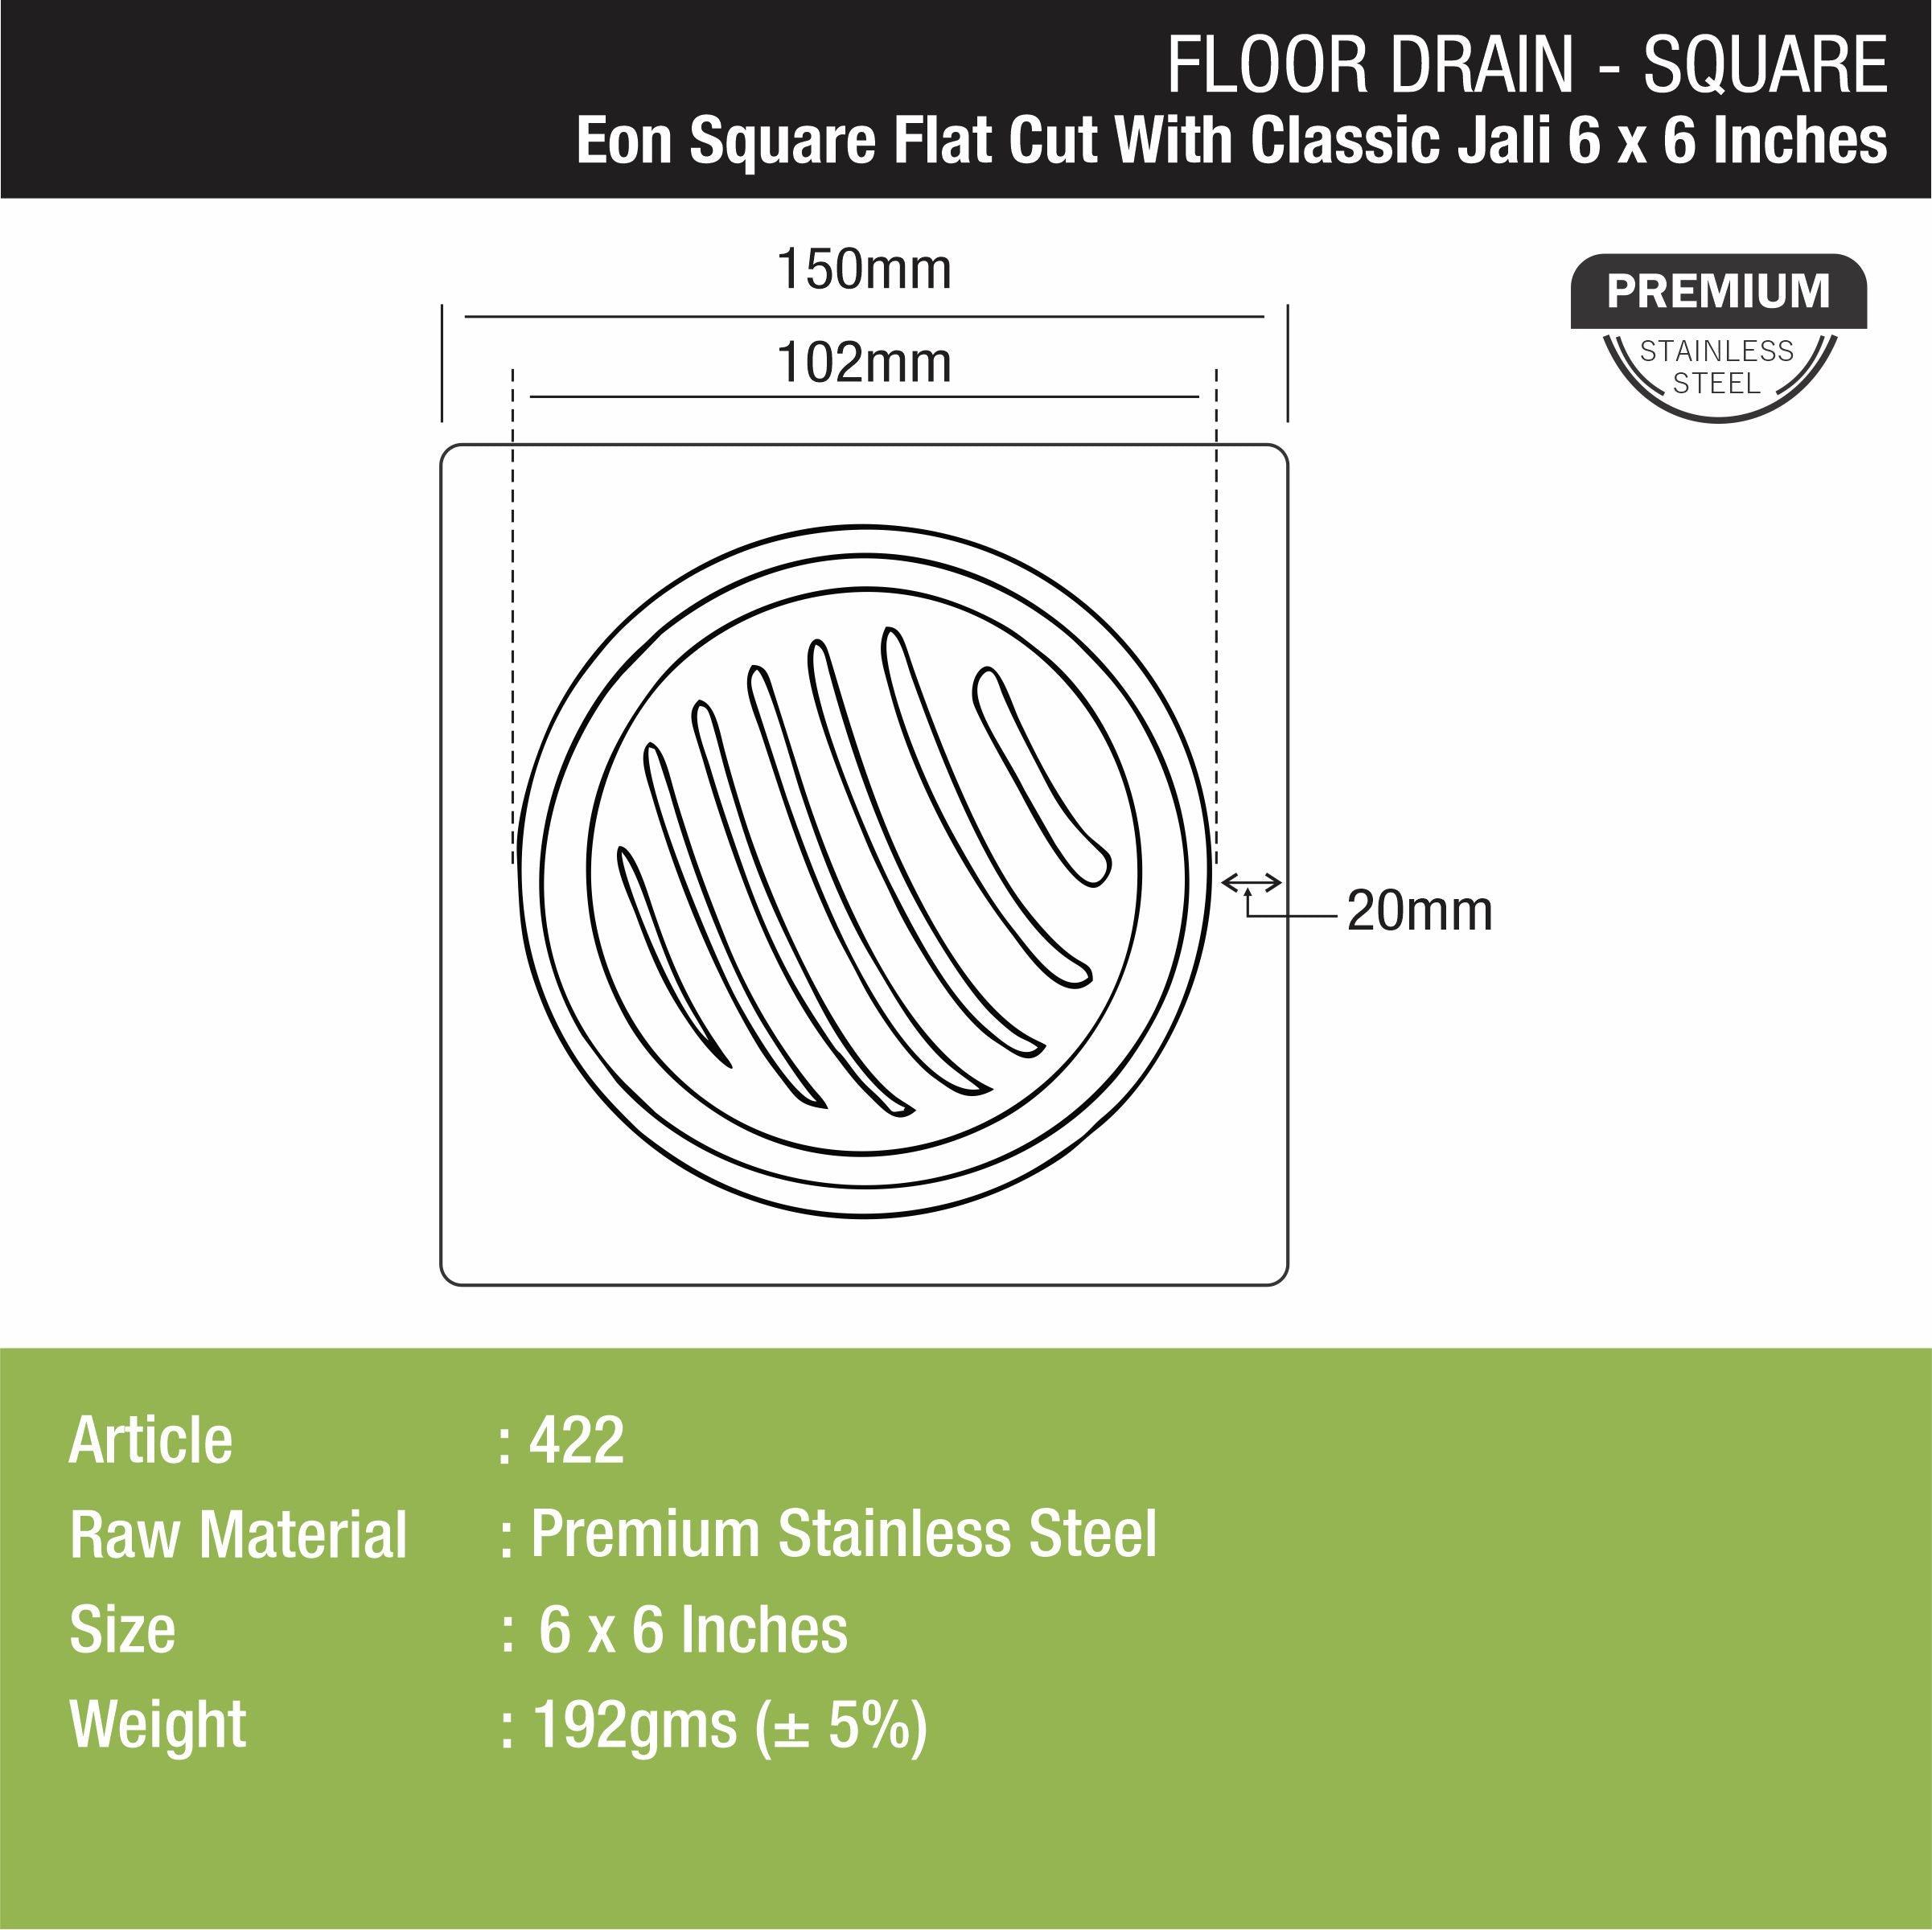 Eon Square Flat Cut Floor Drain with Classic Jali (6 x 6 Inches) - LIPKA - Lipka Home